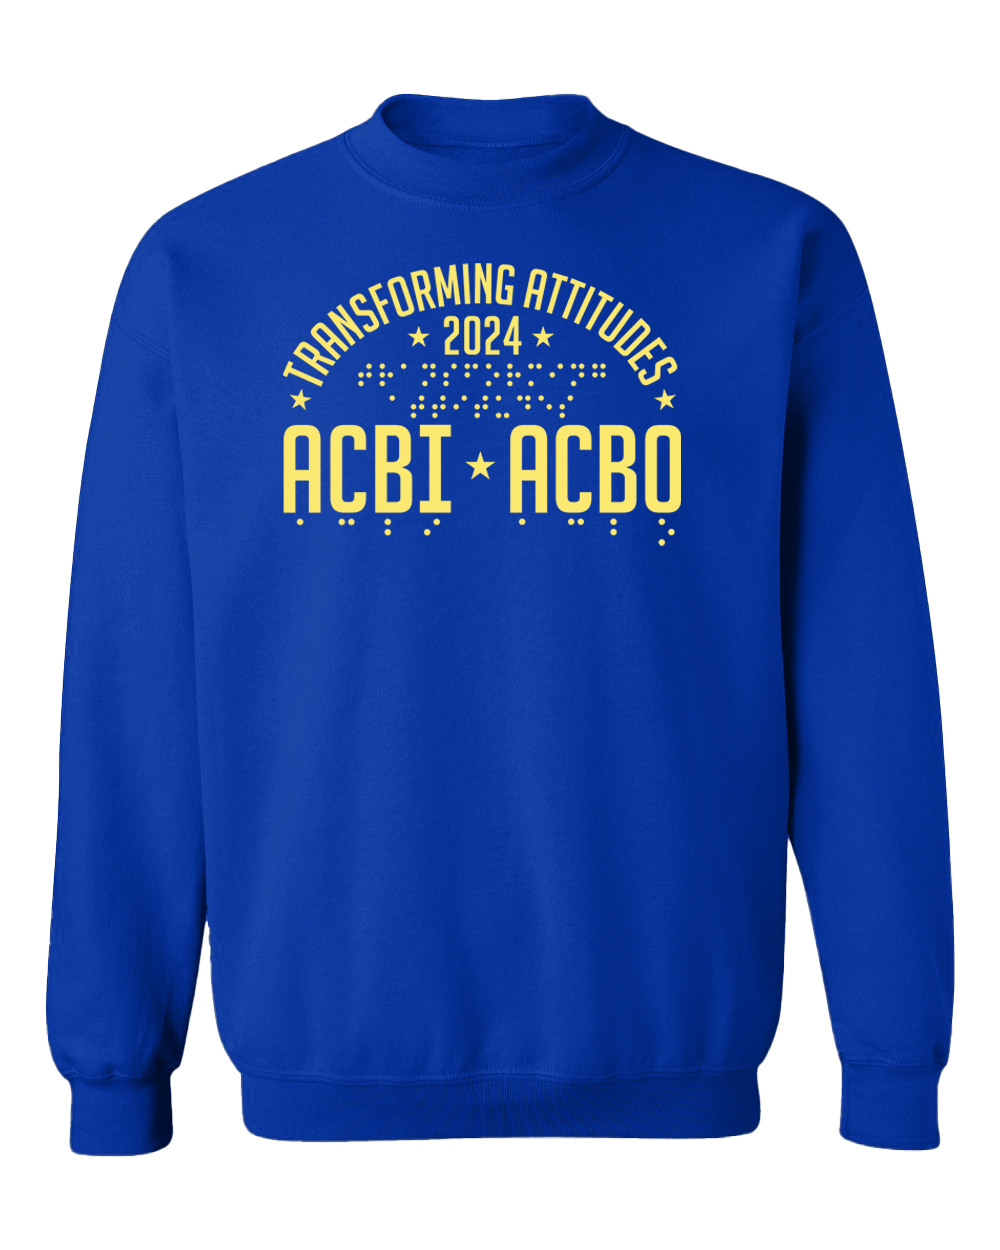 ACBI-ACBO 2024 Crew Sweatshirt - Royal Blue - Pick up at  Convention